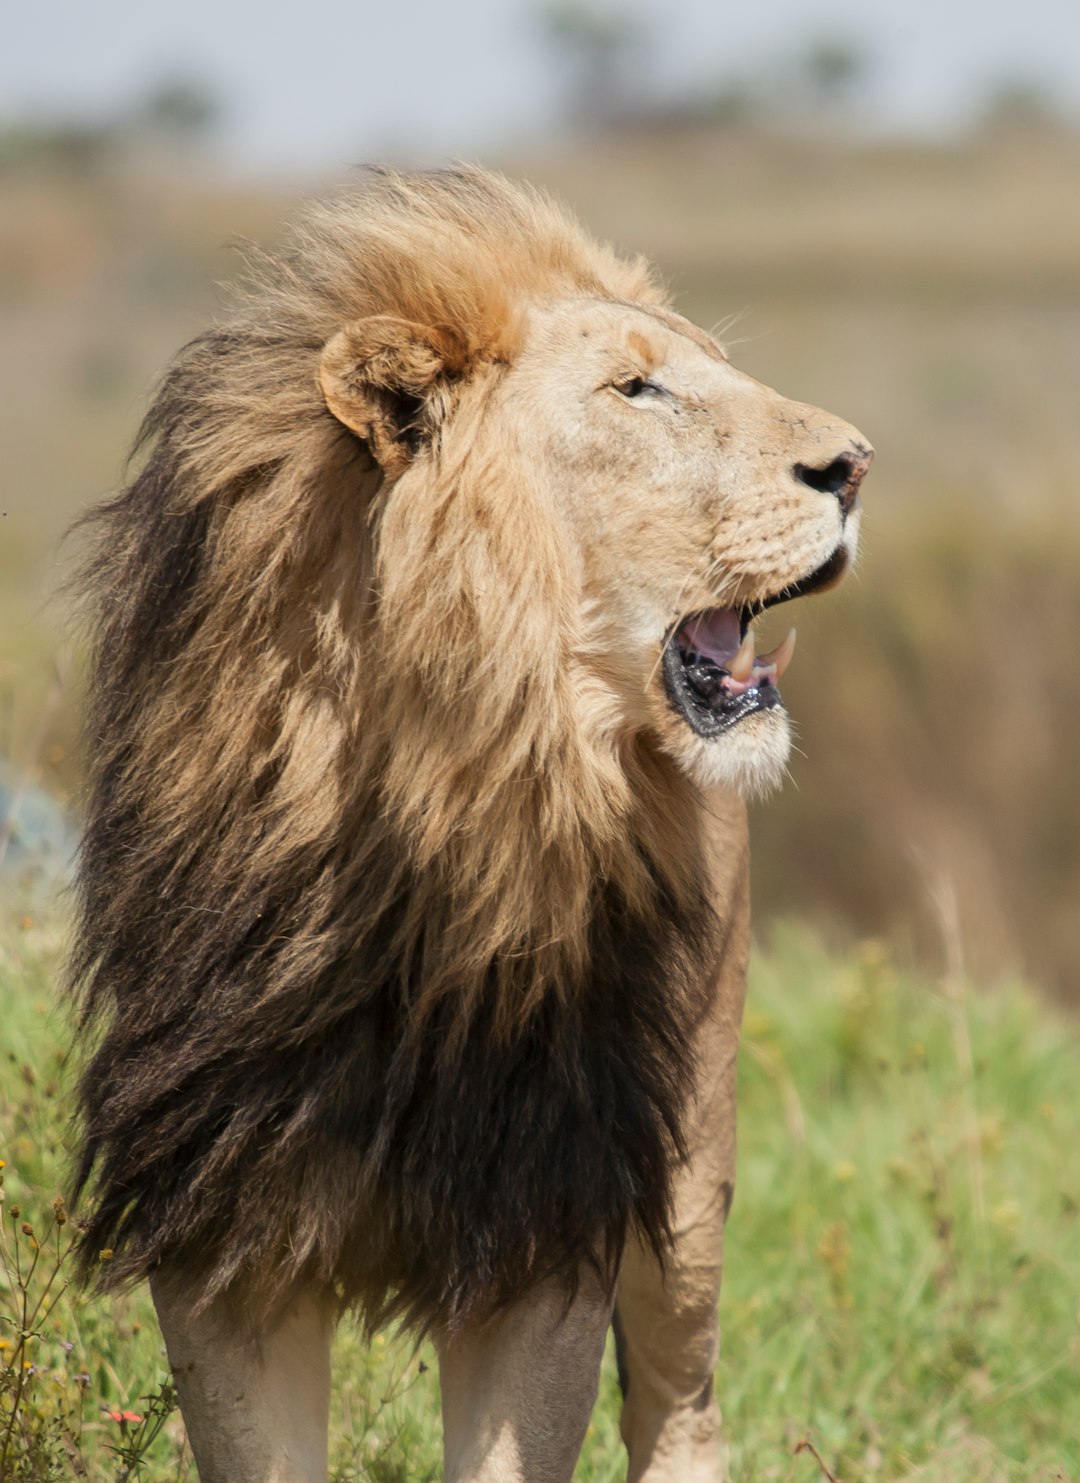  adult lion on grass field lion